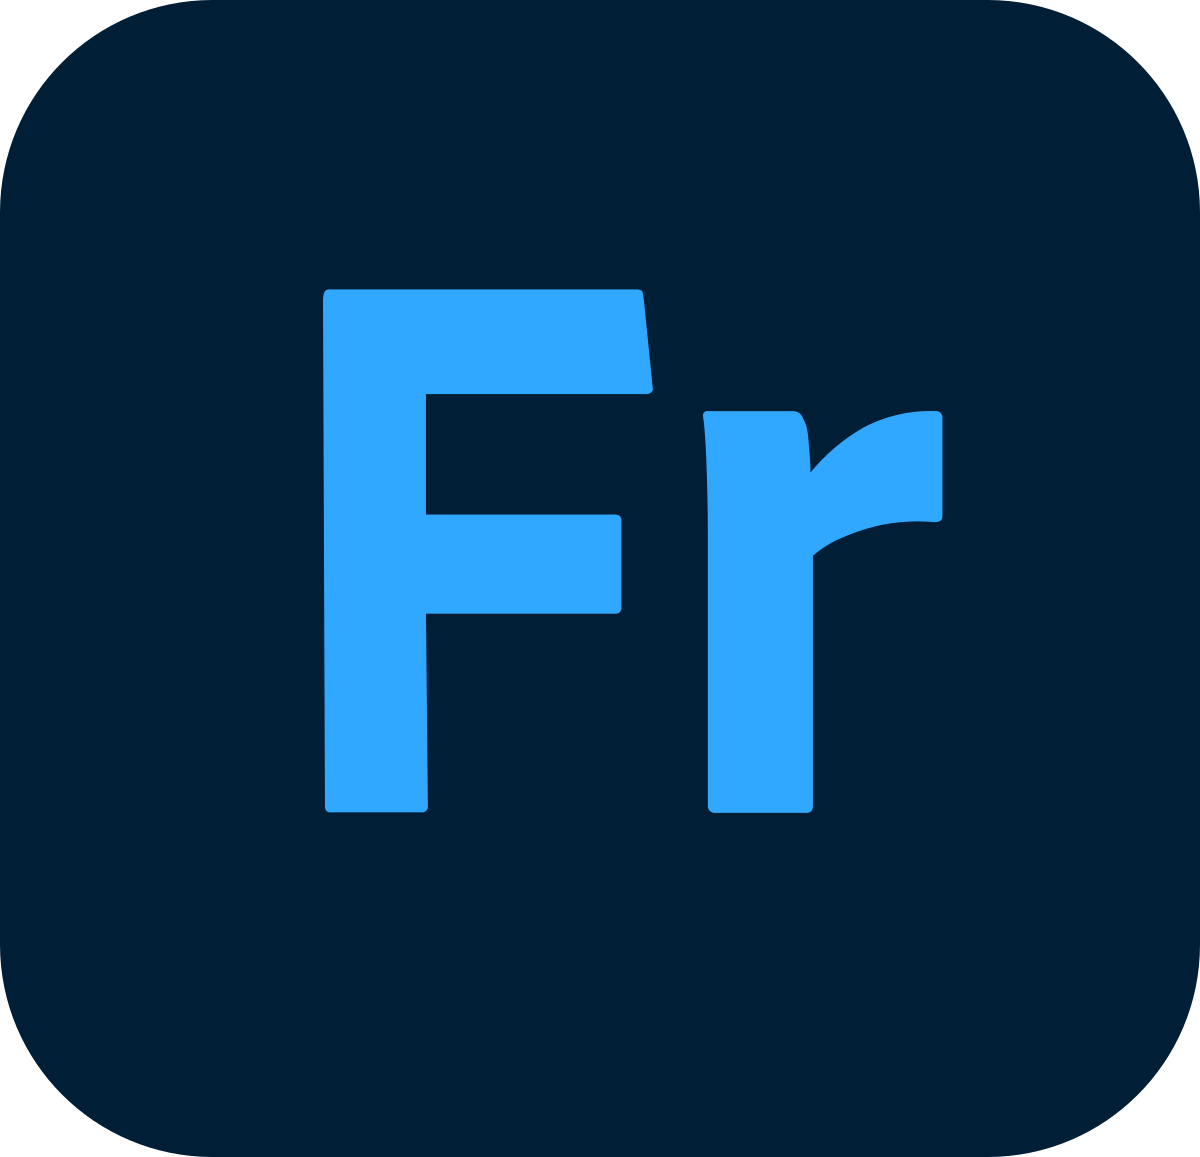 Adobe Fresco 5.0.1.1338 instal the last version for apple